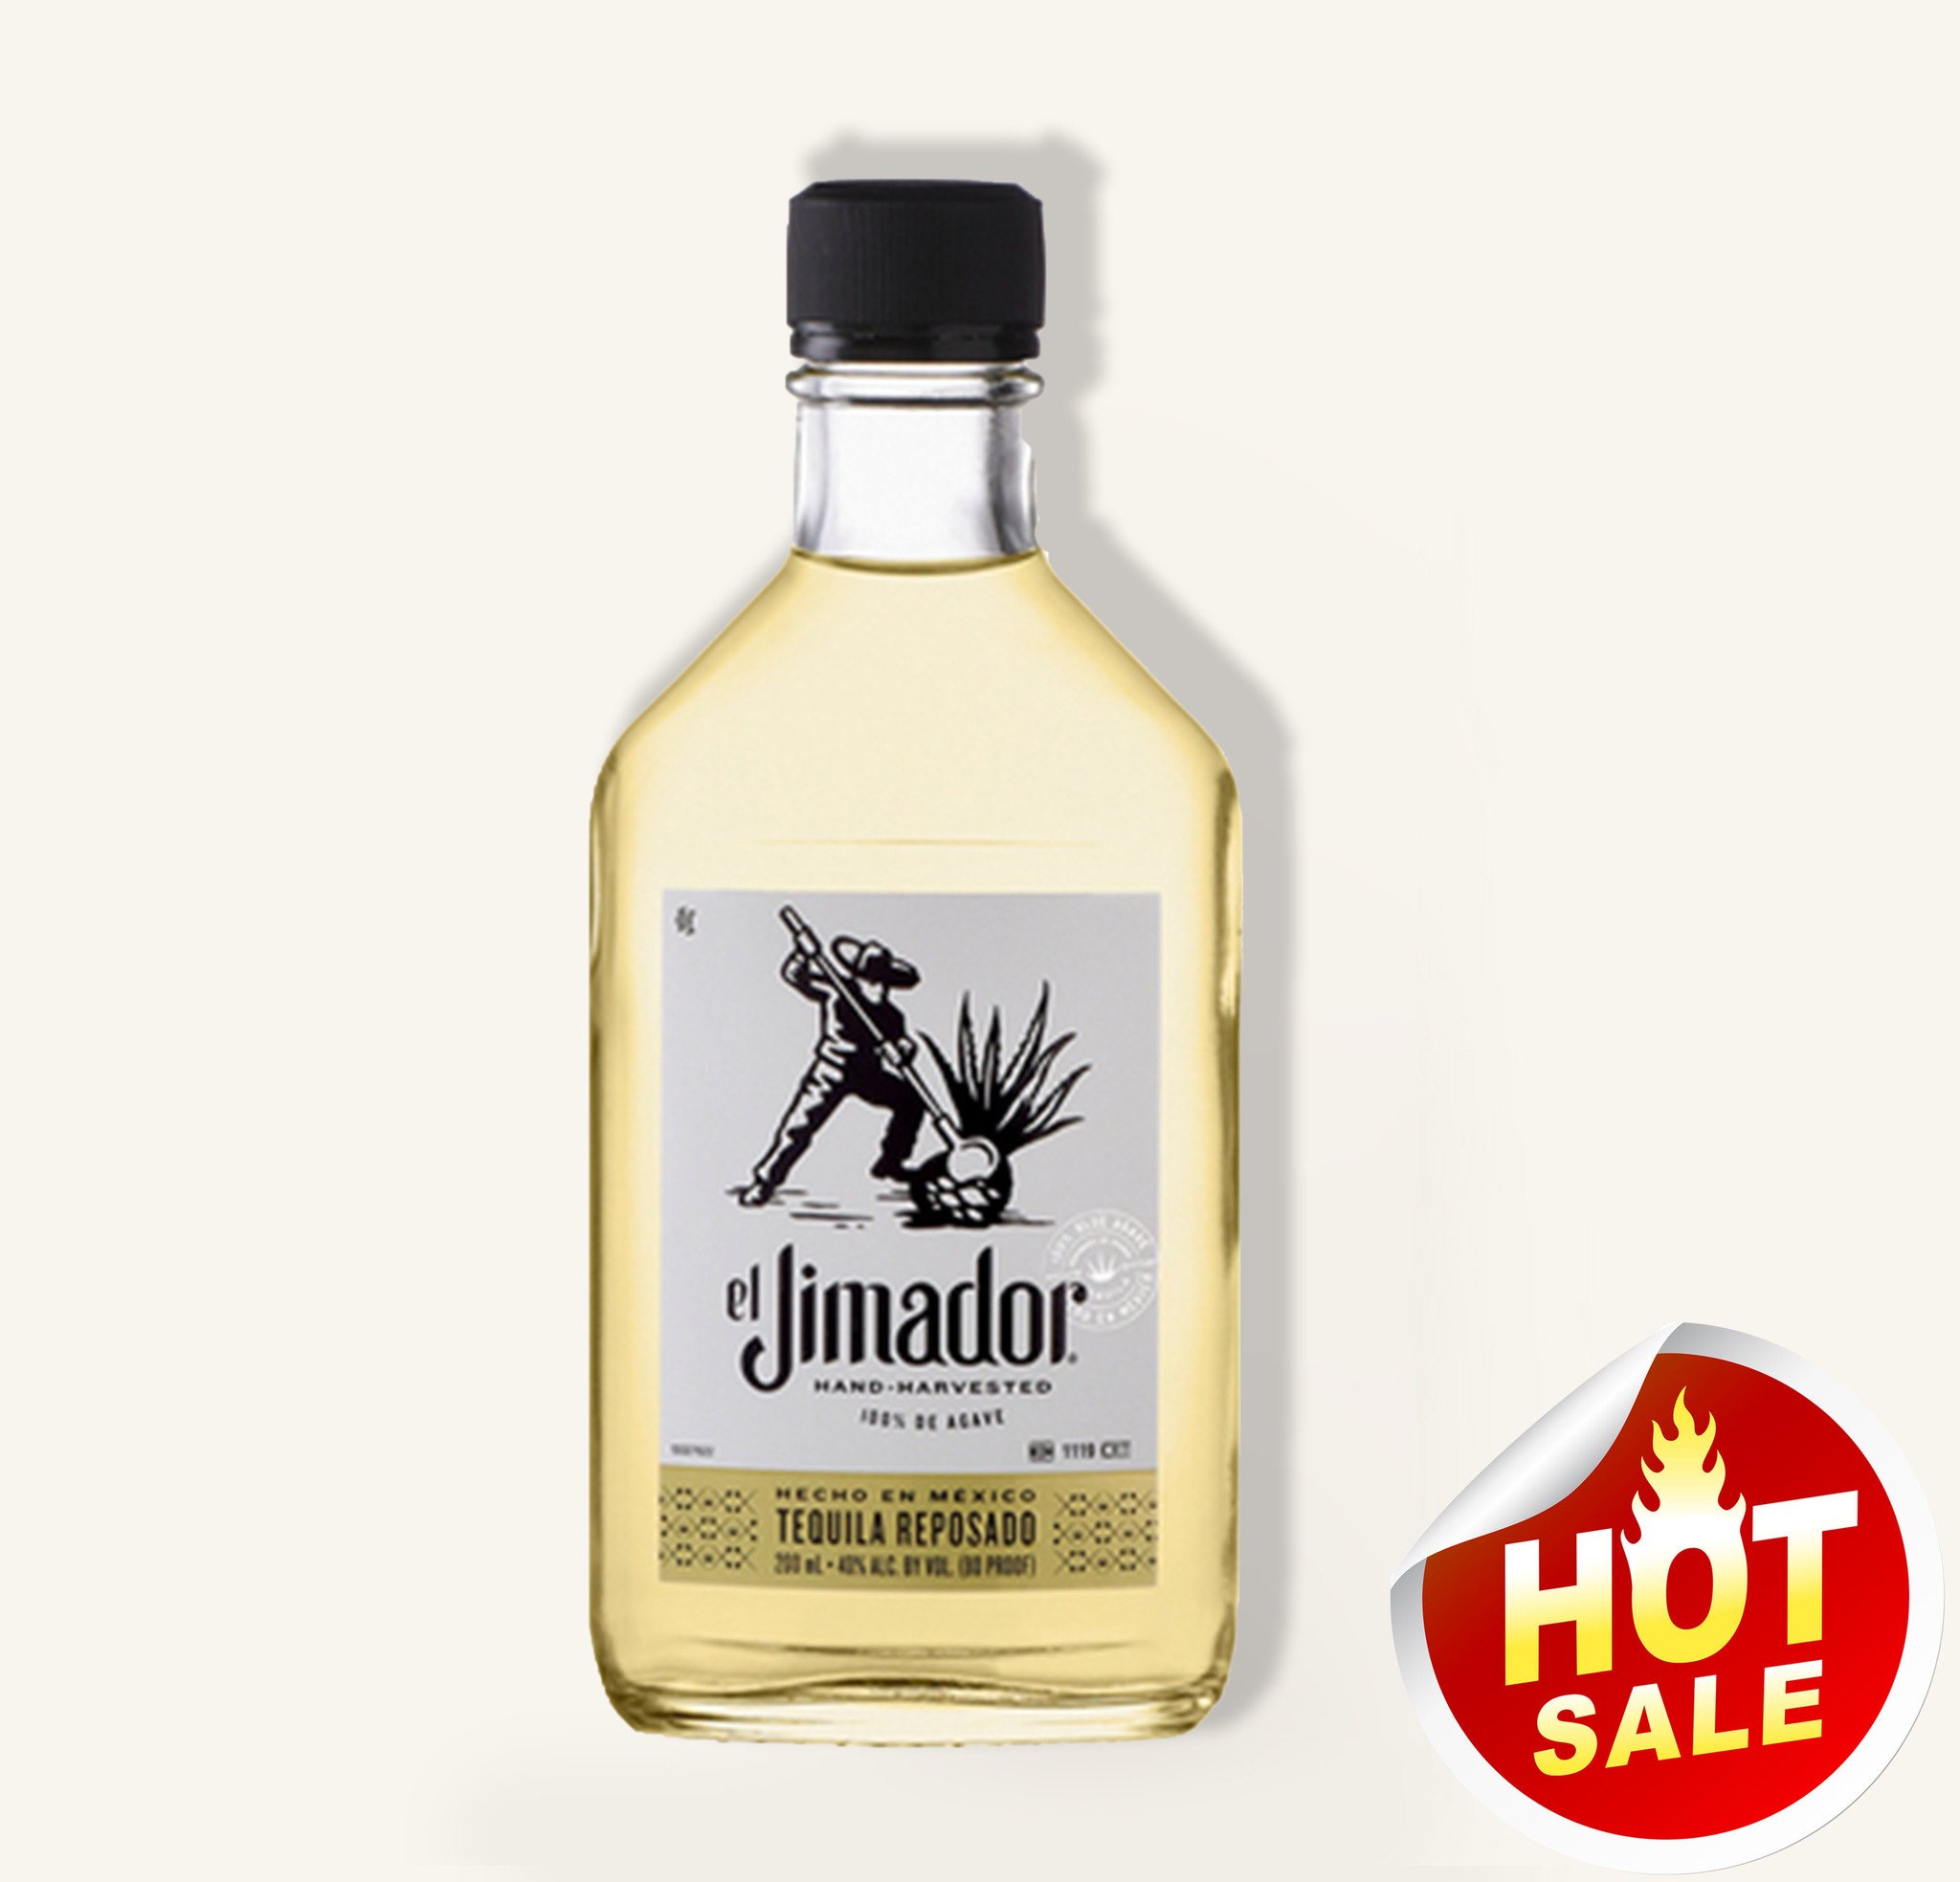 El Jimador Reposado Tequila 200ml $8 FREE DELIVERY - Uncle Fossil  Wine&Spirits